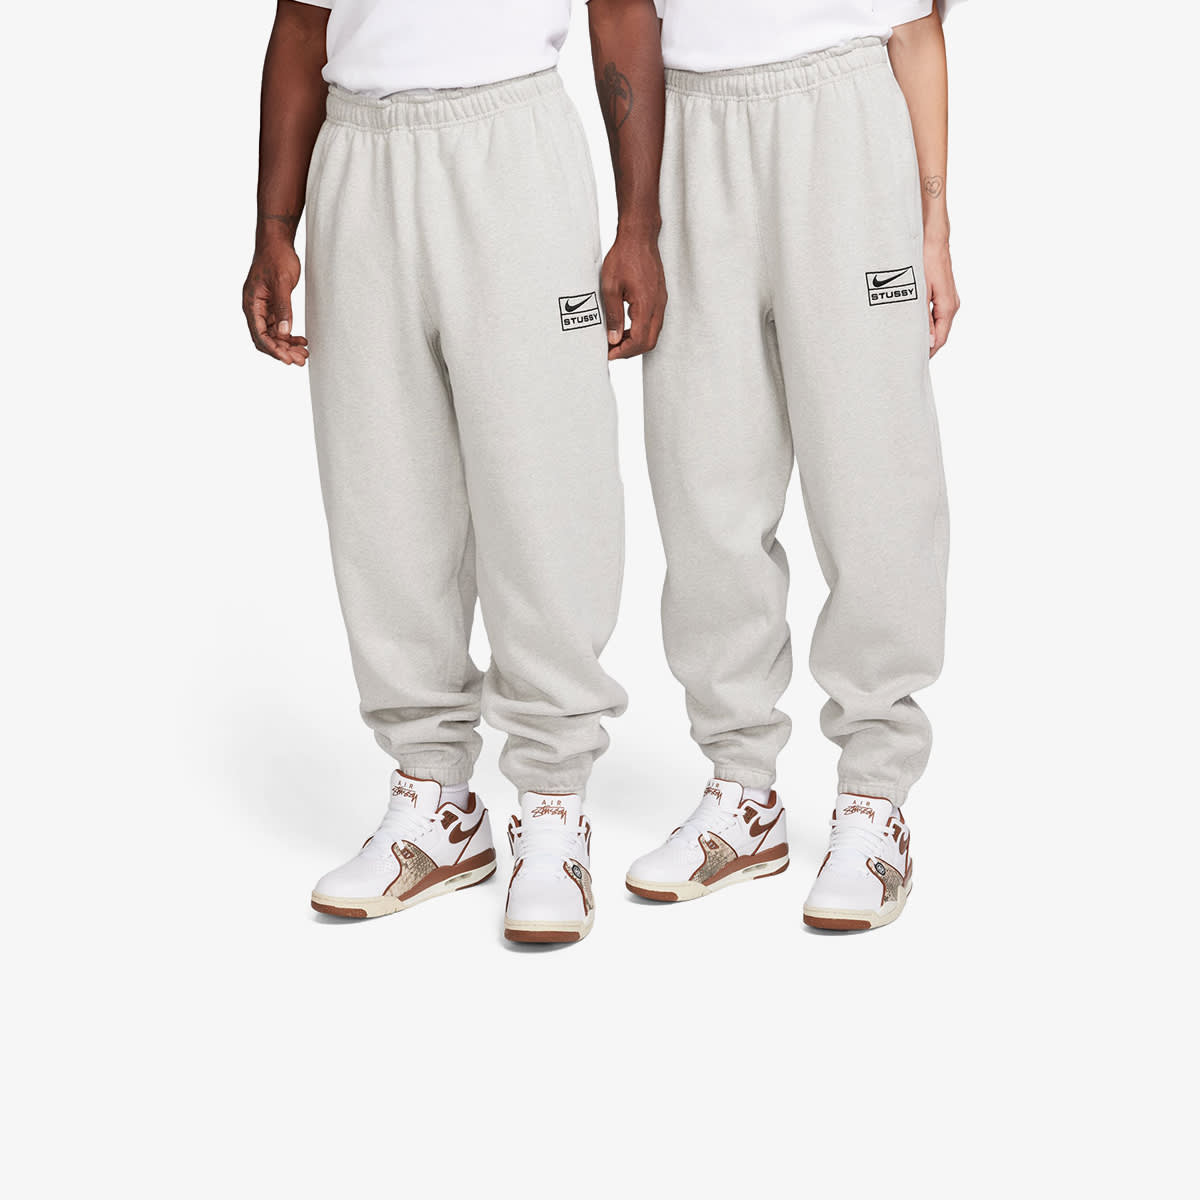 Nike x Stussy Fleece Pant (Grey & Black) | END. Launches